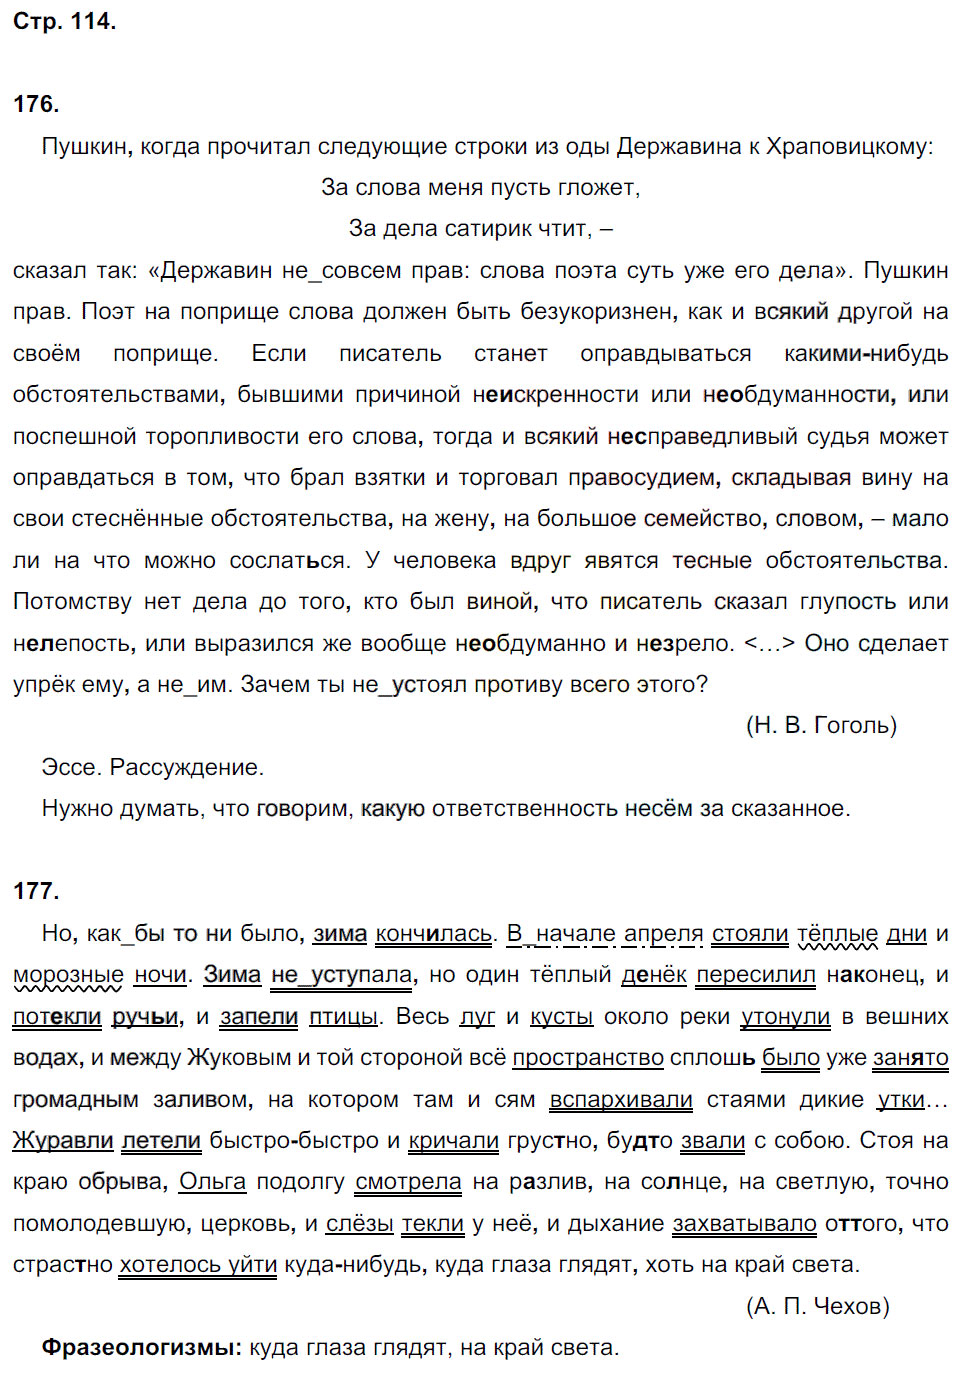 гдз 8 класс рабочая тетрадь страница 114 русский язык Кулаева